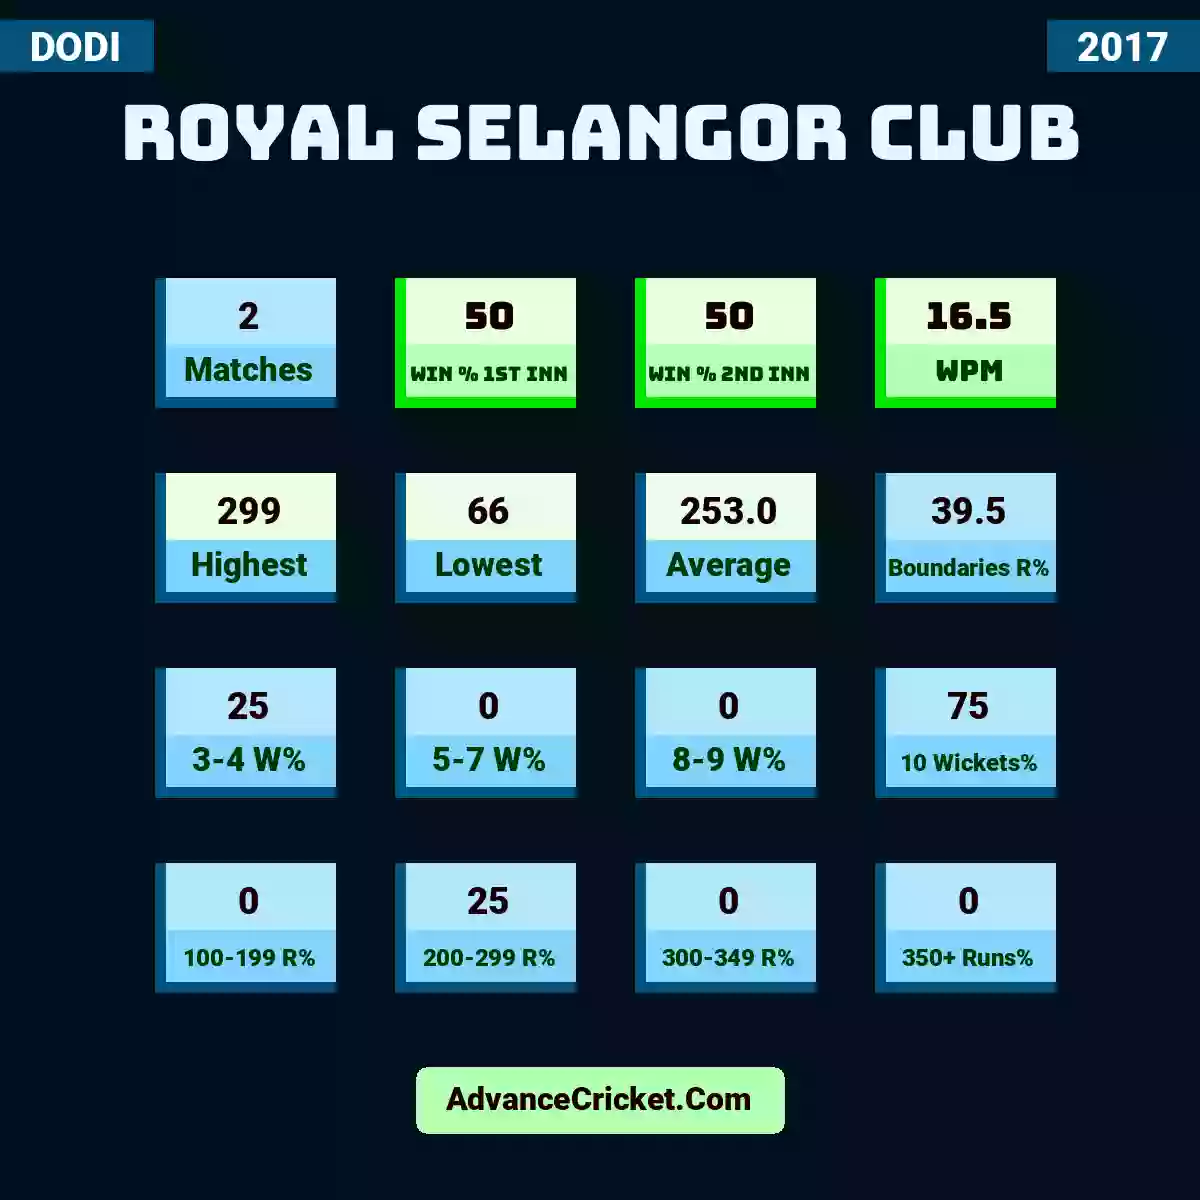 Image showing Royal Selangor Club with Matches: 2, Win % 1st Inn: 50, Win % 2nd Inn: 50, WPM: 16.5, Highest: 299, Lowest: 66, Average: 253.0, Boundaries R%: 39.5, 3-4 W%: 25, 5-7 W%: 0, 8-9 W%: 0, 10 Wickets%: 75, 100-199 R%: 0, 200-299 R%: 25, 300-349 R%: 0, 350+ Runs%: 0.